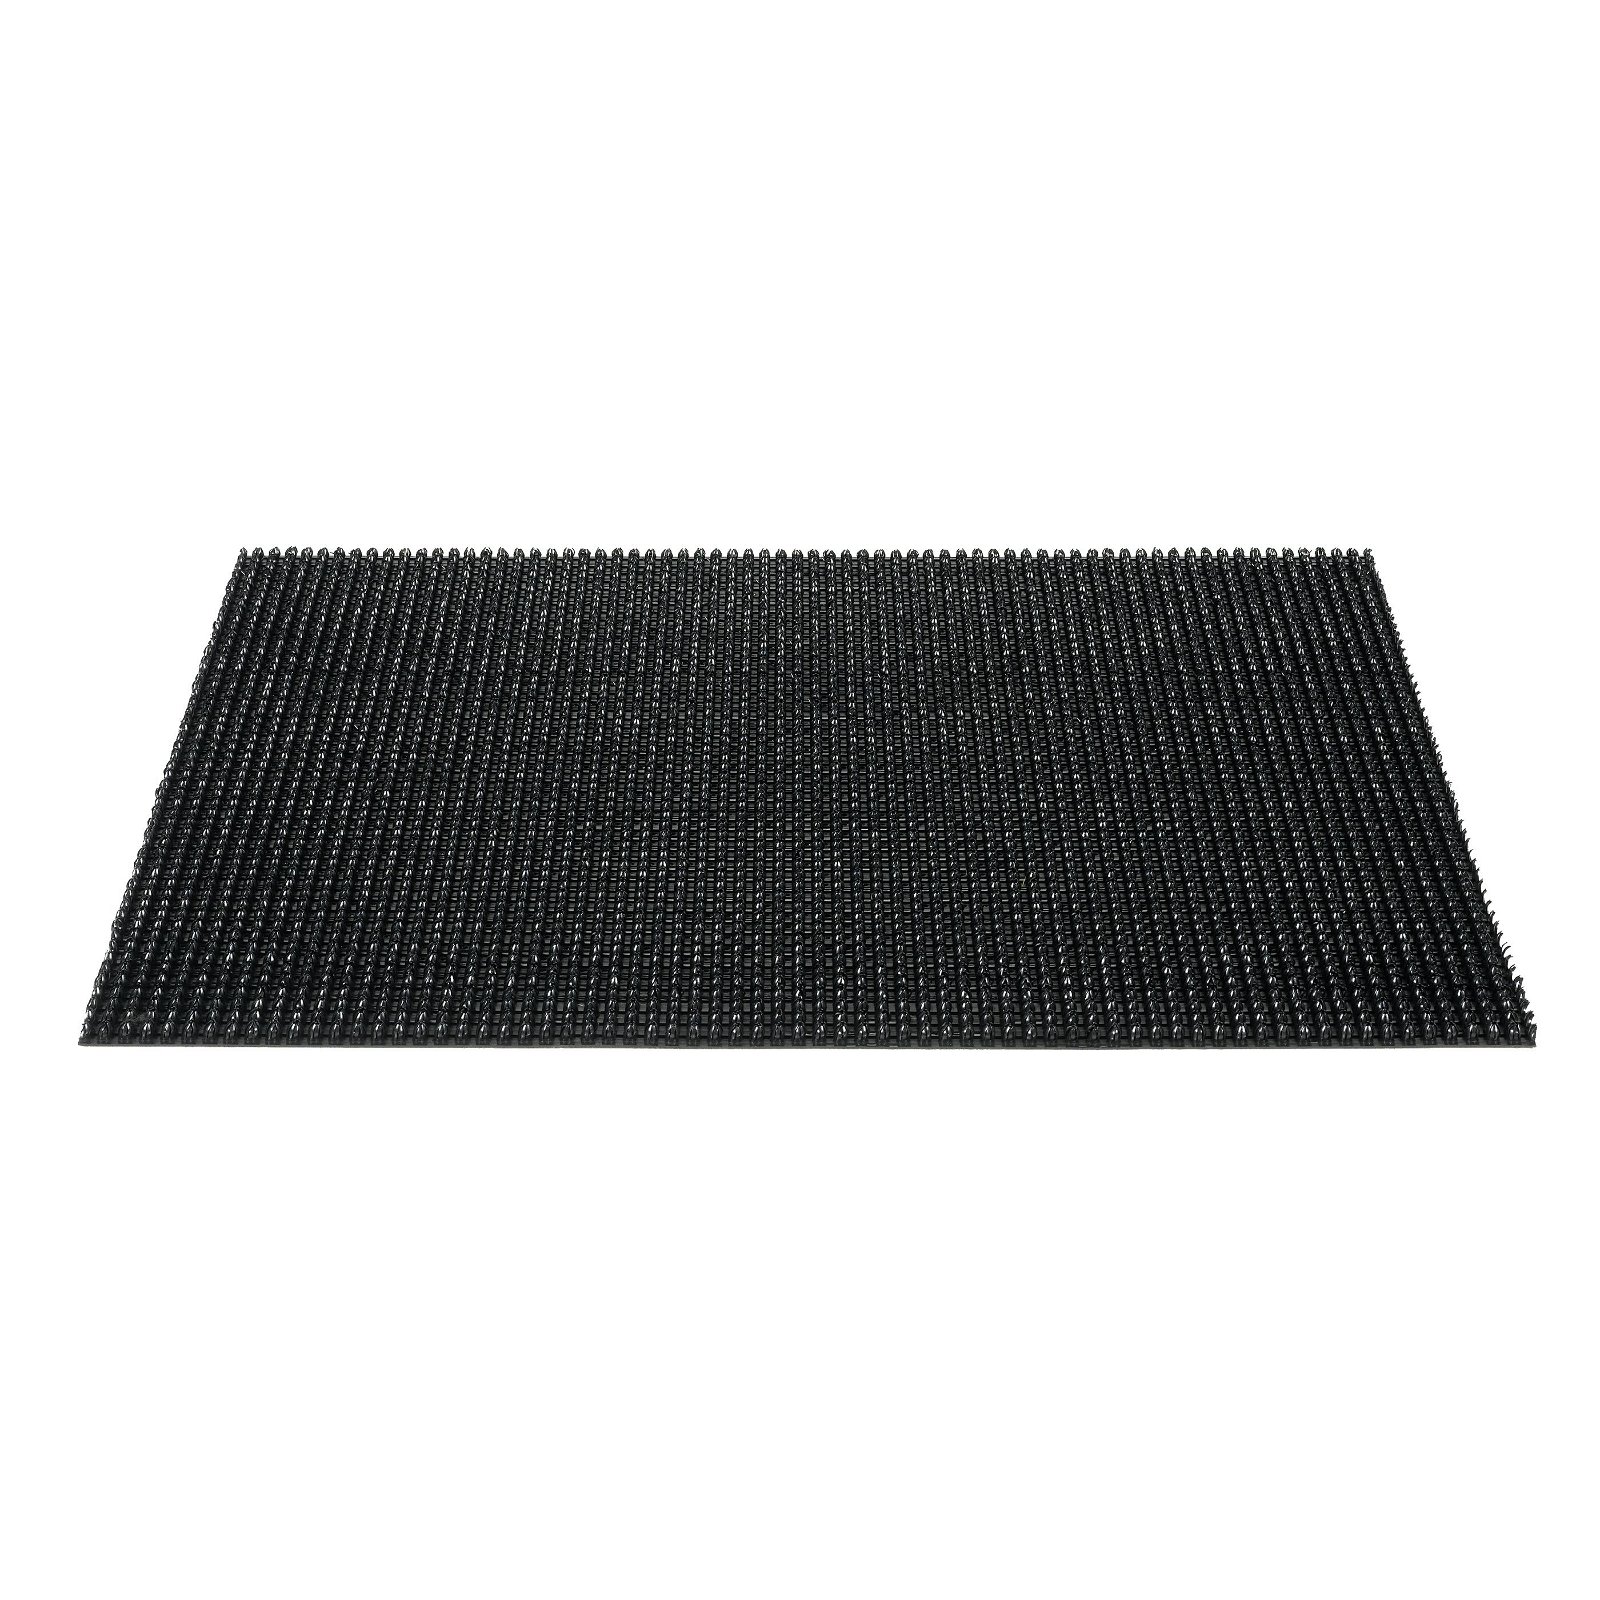 Kölle Fußbodenmatte in Schwarz, Maße 60 x 80 cm, 100 % Polyethylen